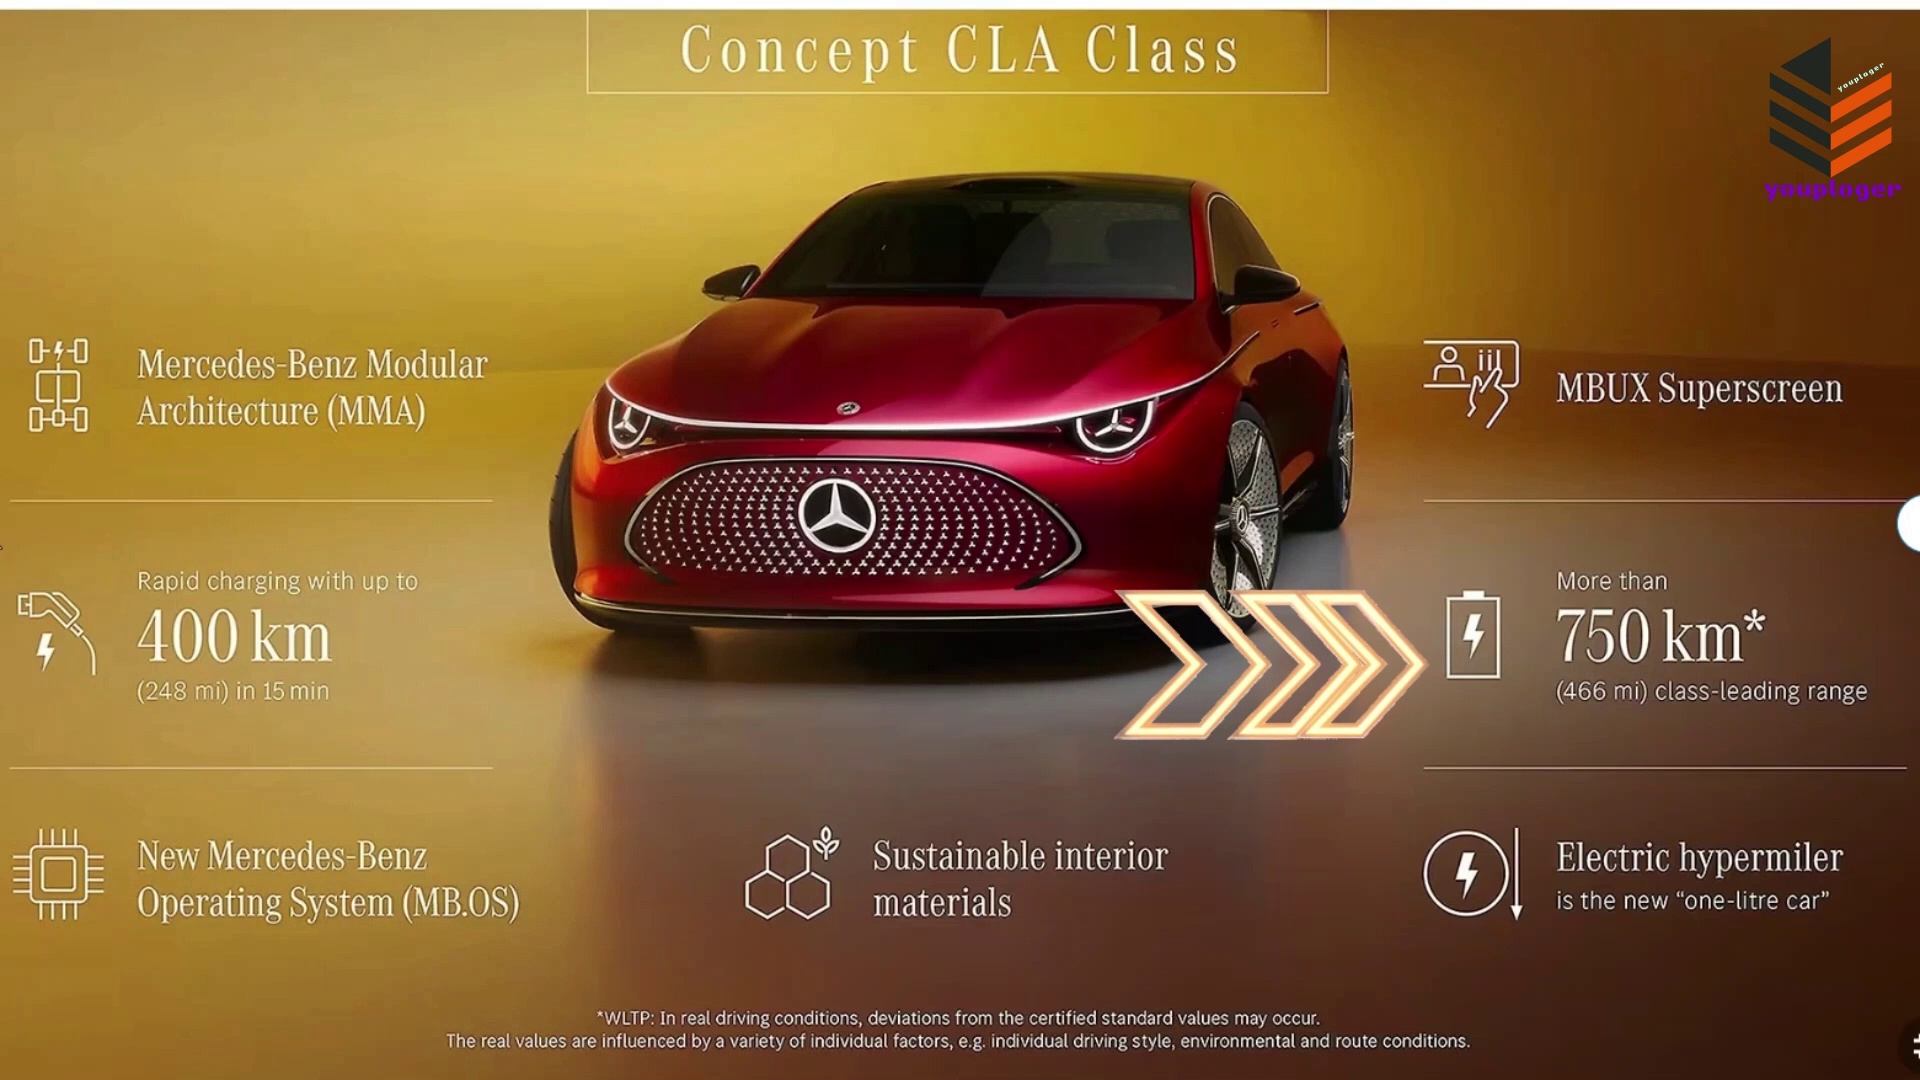 the new mercedes-benz concept cla class 2025